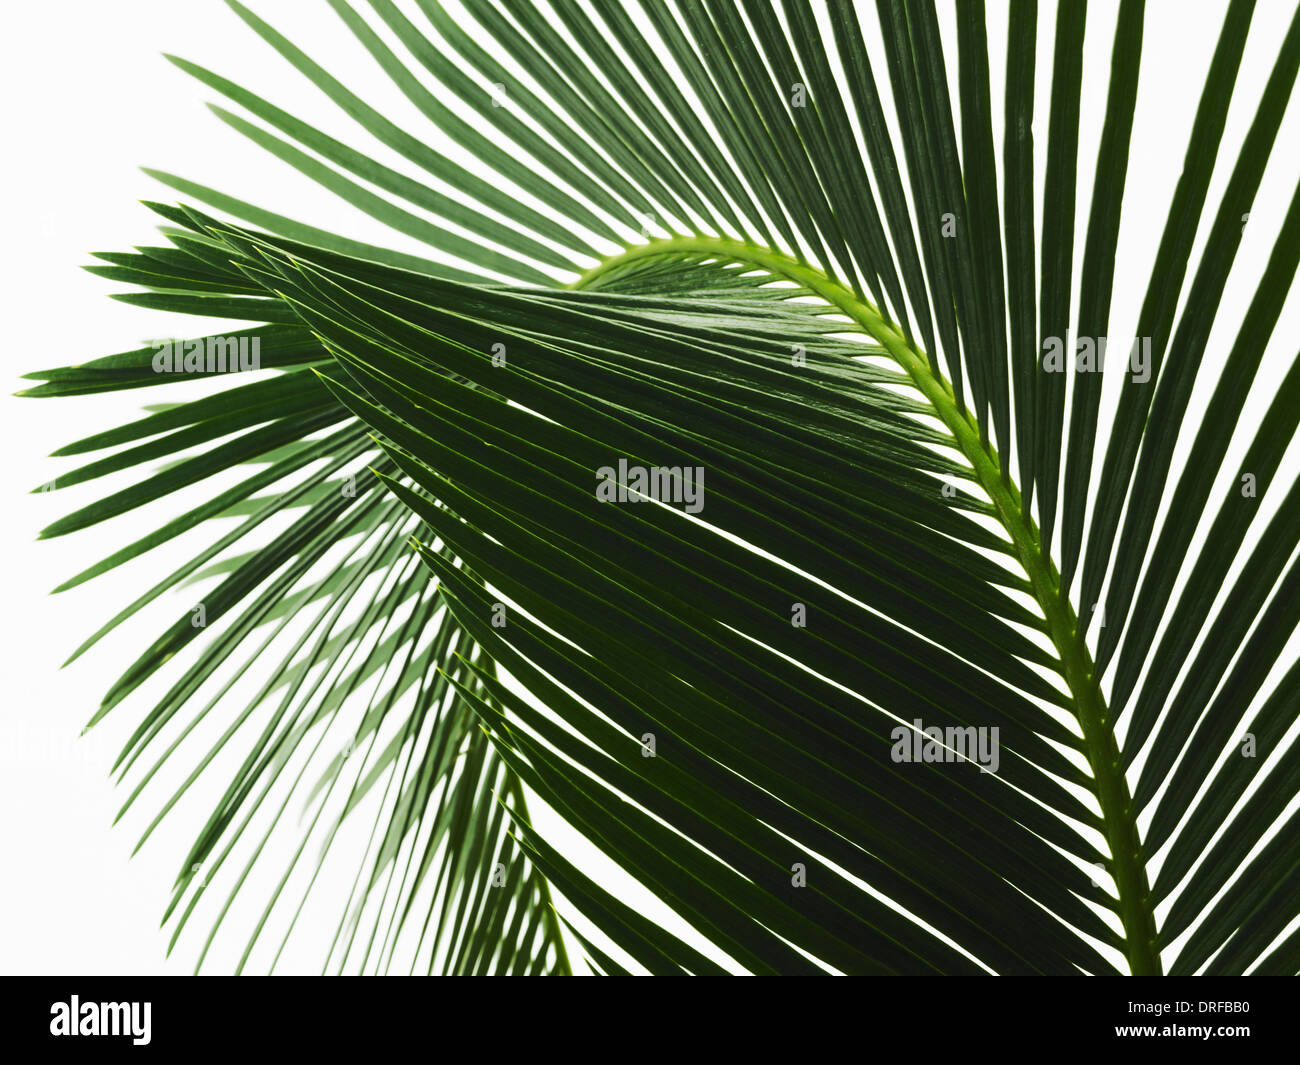 glänzend grüne Palmblatt hautnah mit Mittelrippe Stockfoto